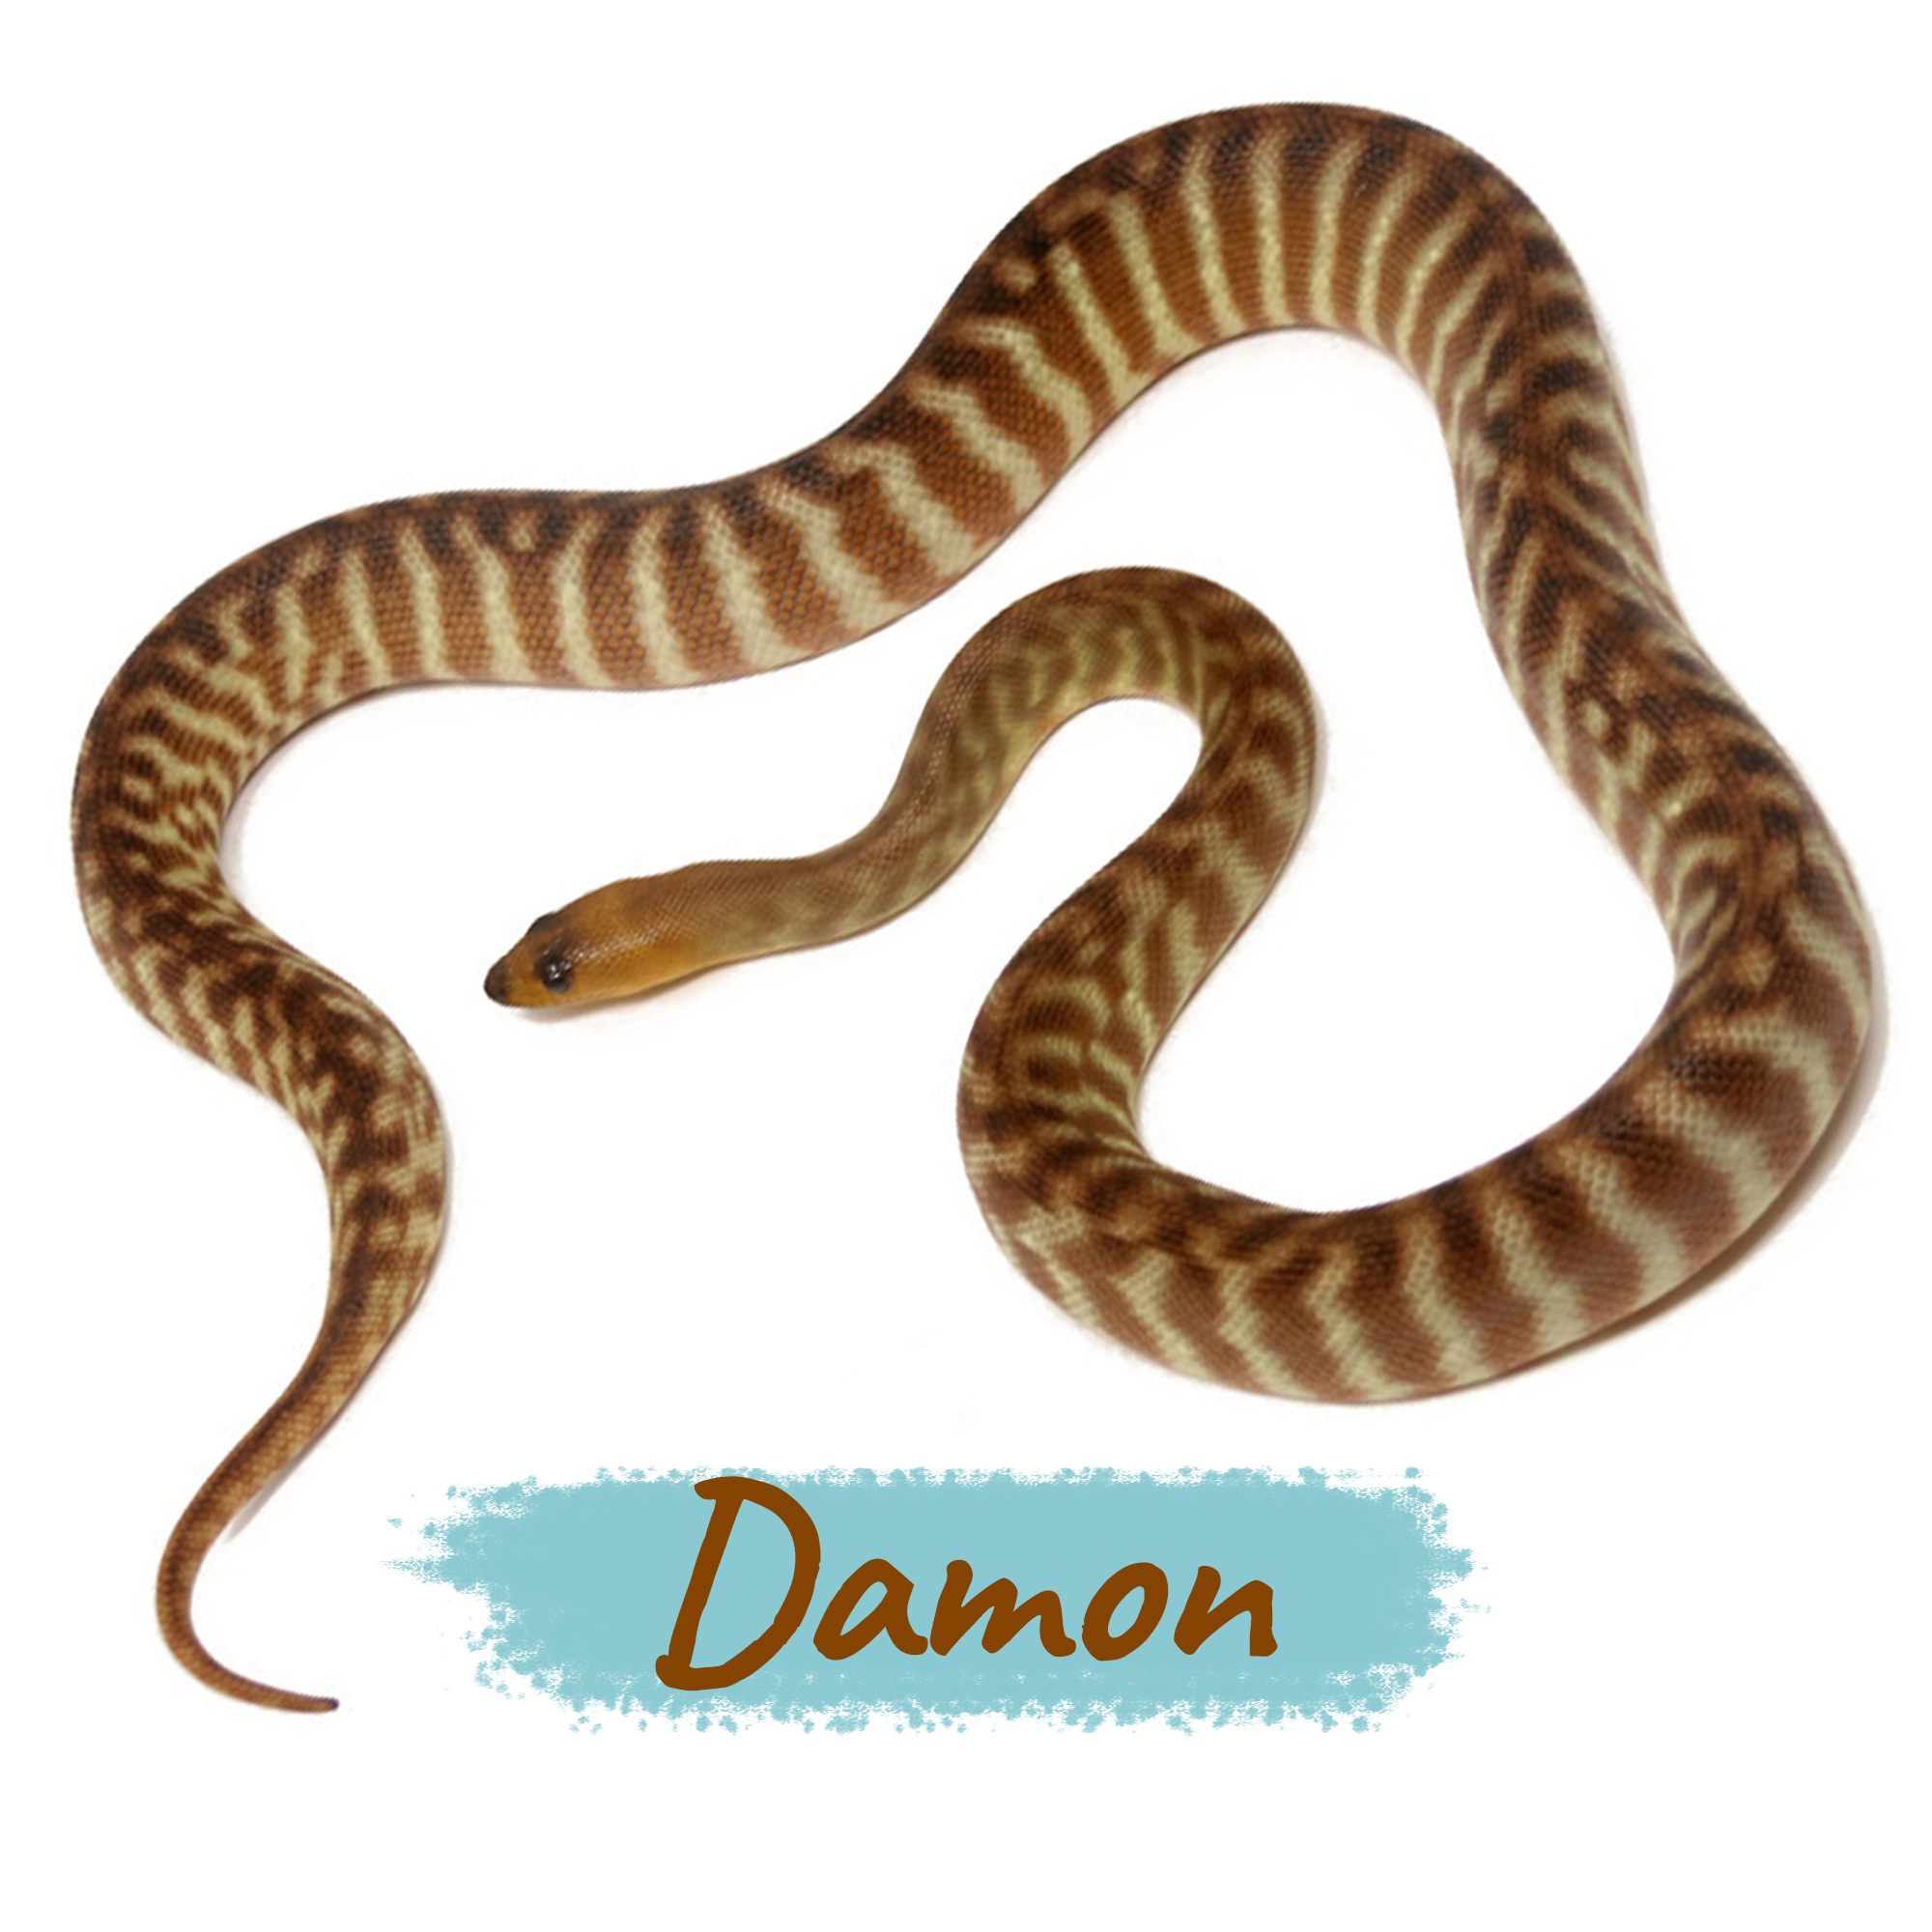 Damon Woma Python (Aspidites ramsayi)